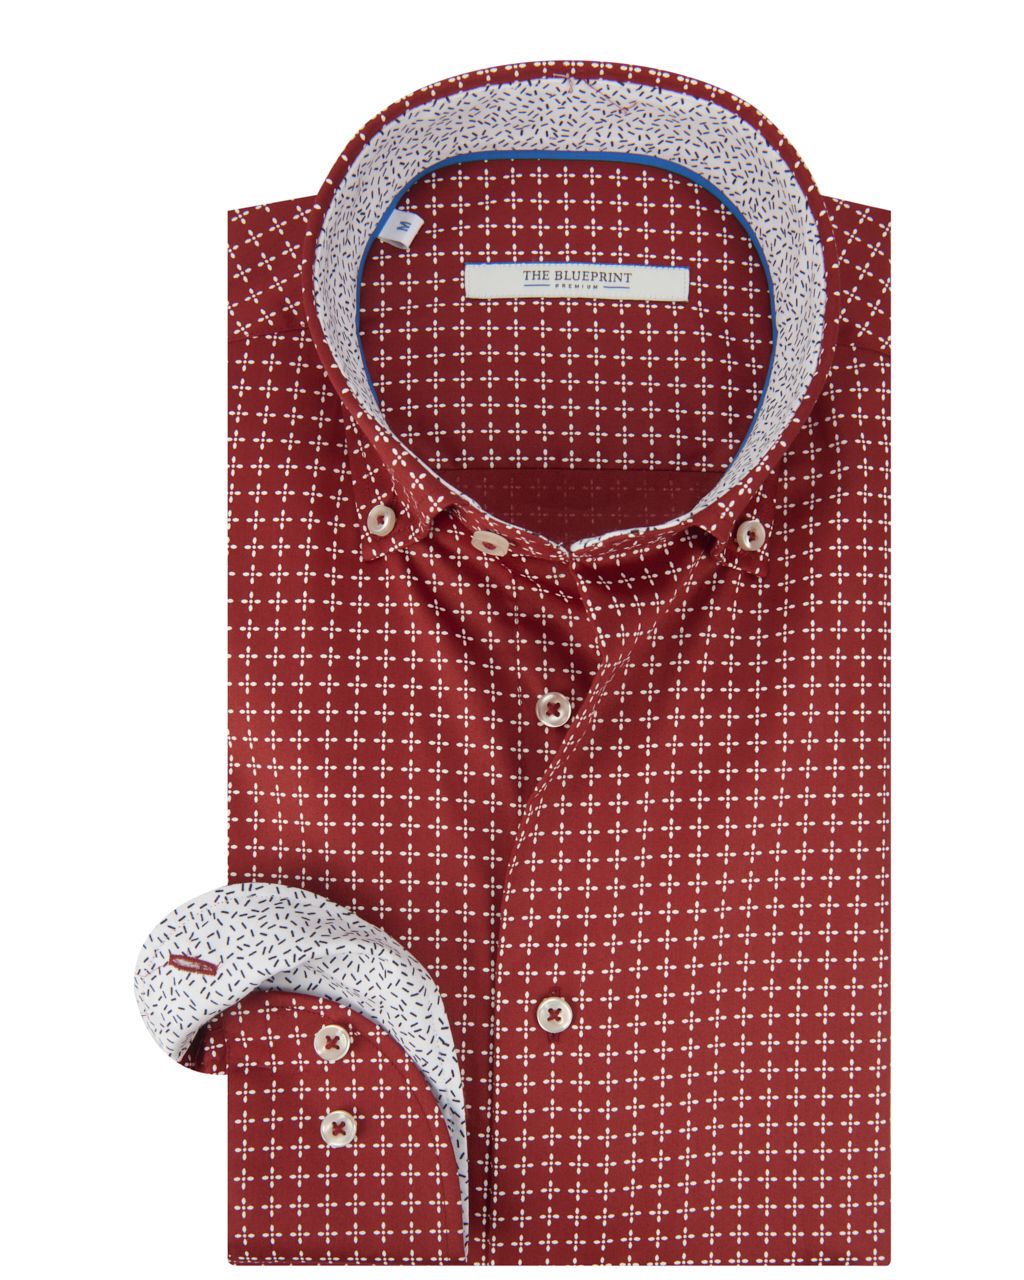 The BLUEPRINT Premium Trendy overhemd LM Rood print 064763-001-L